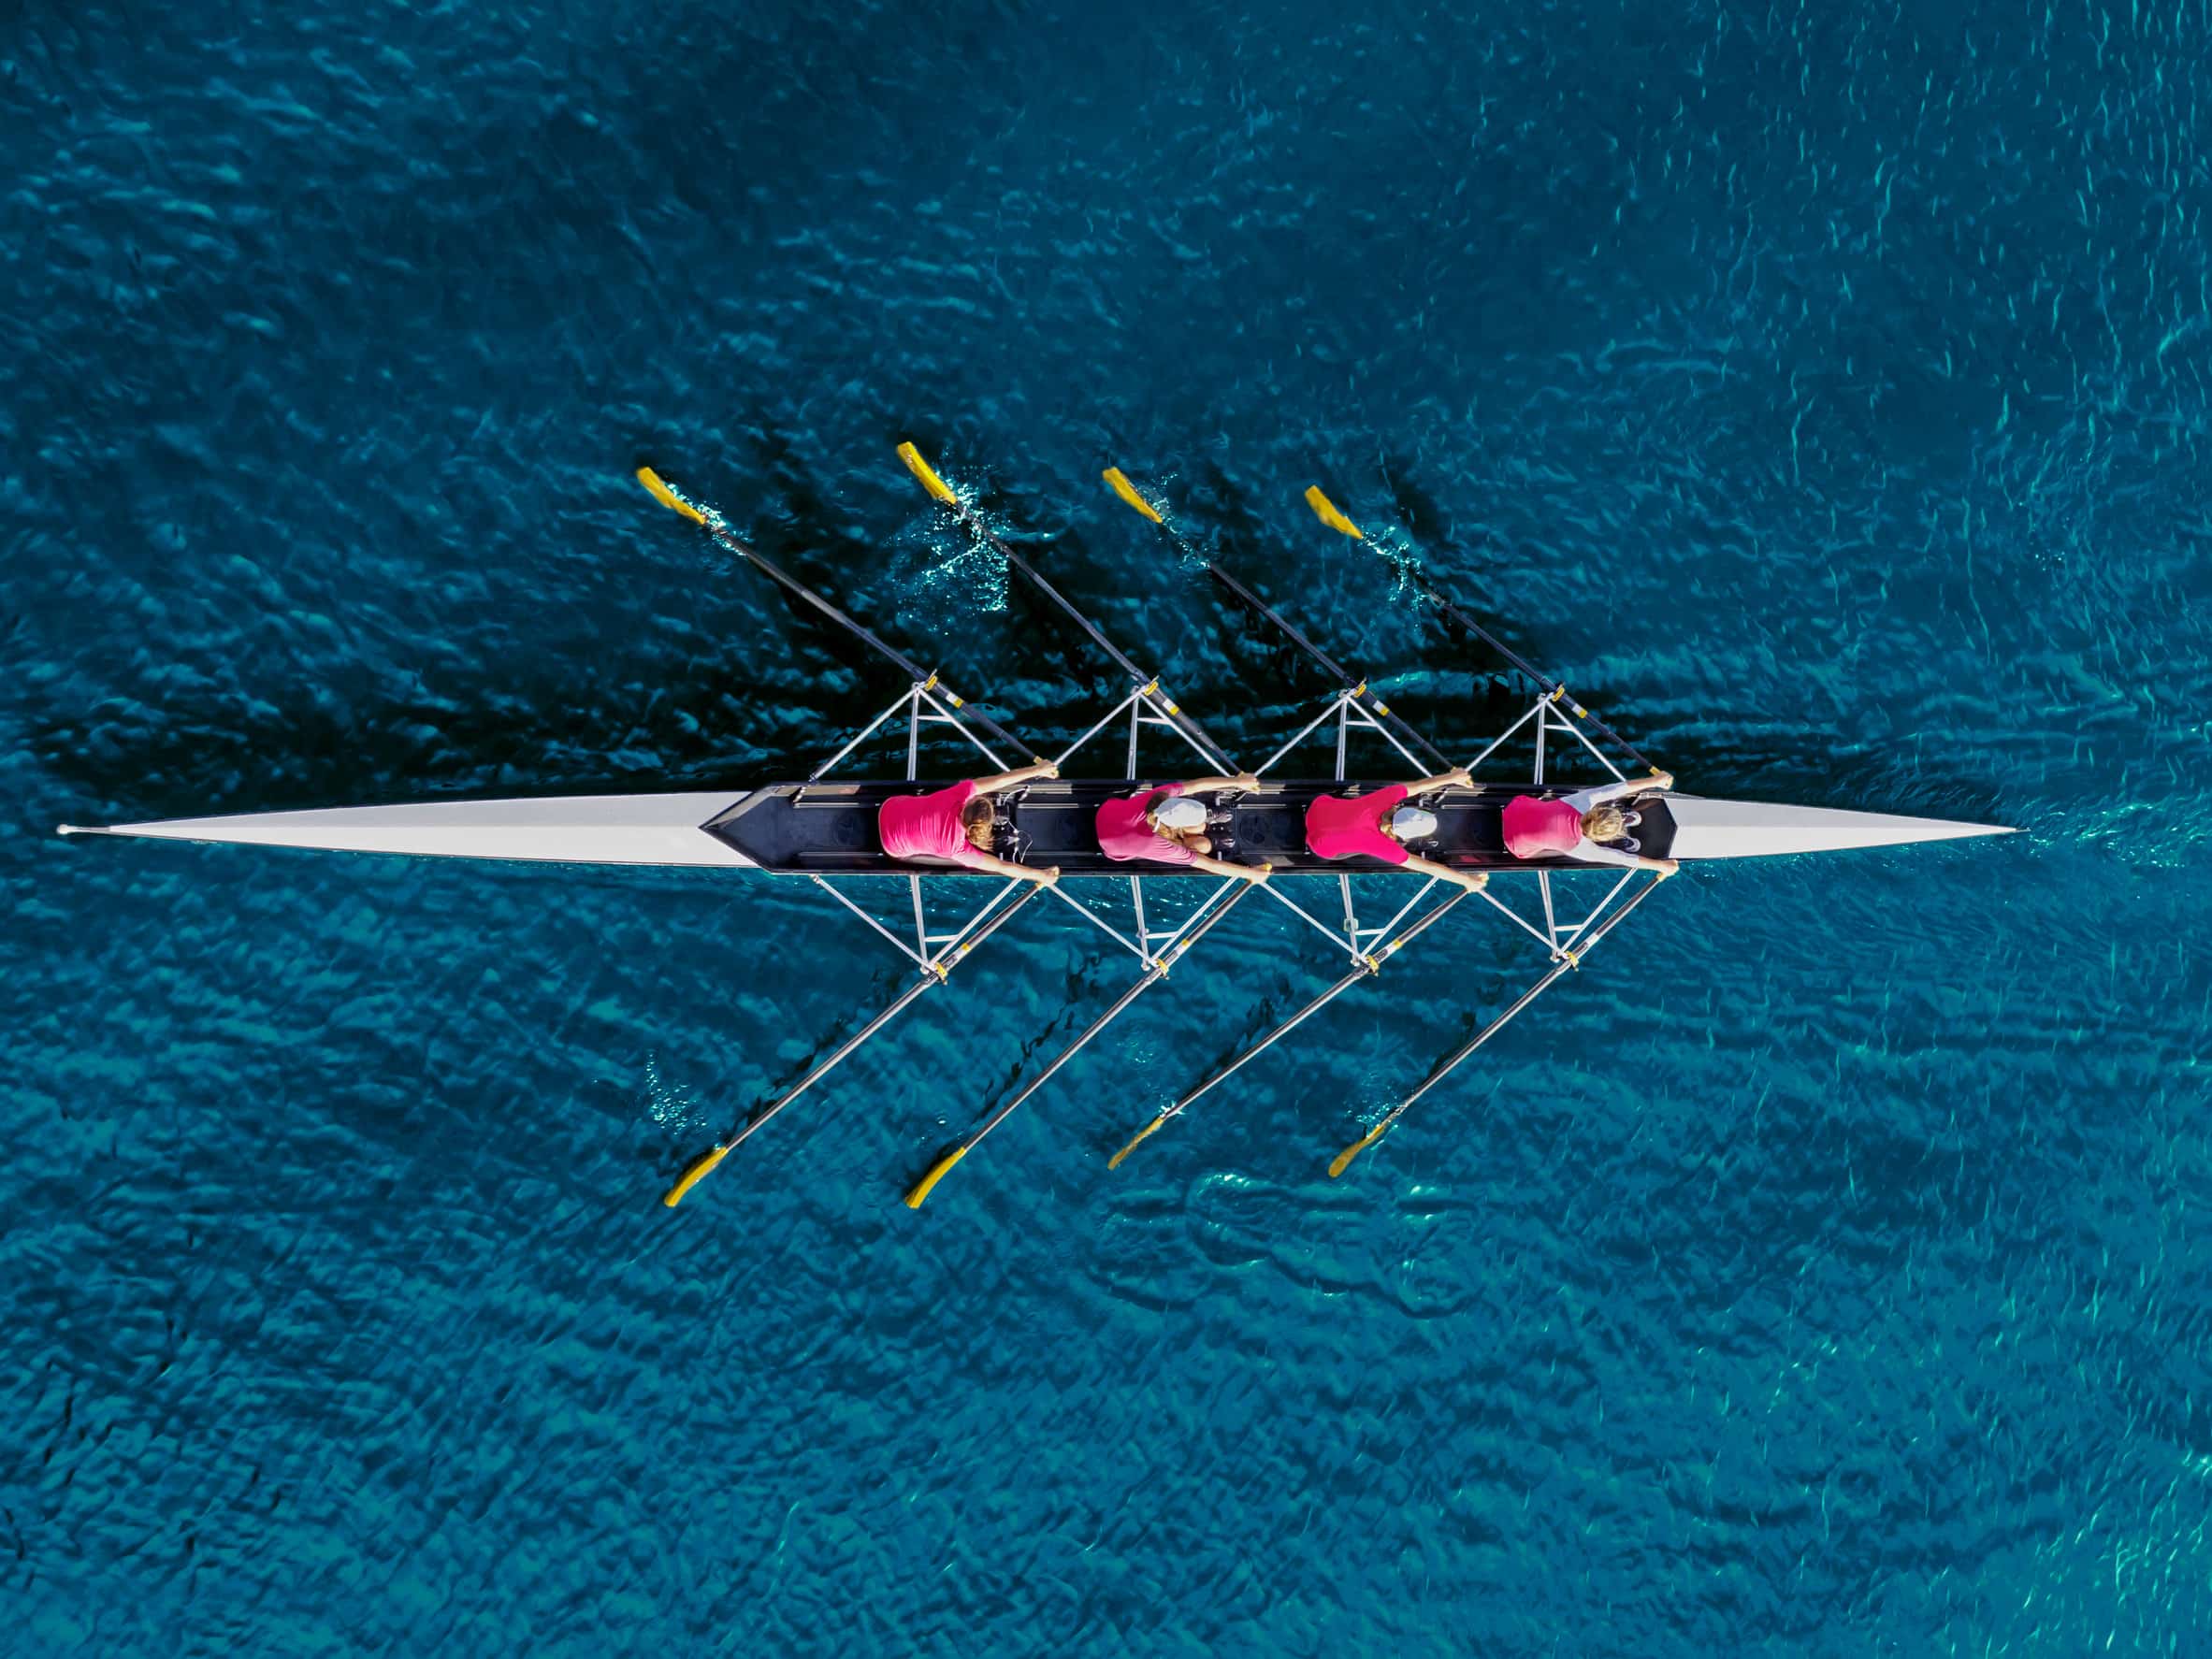 synchronized team boat rowing in ocean